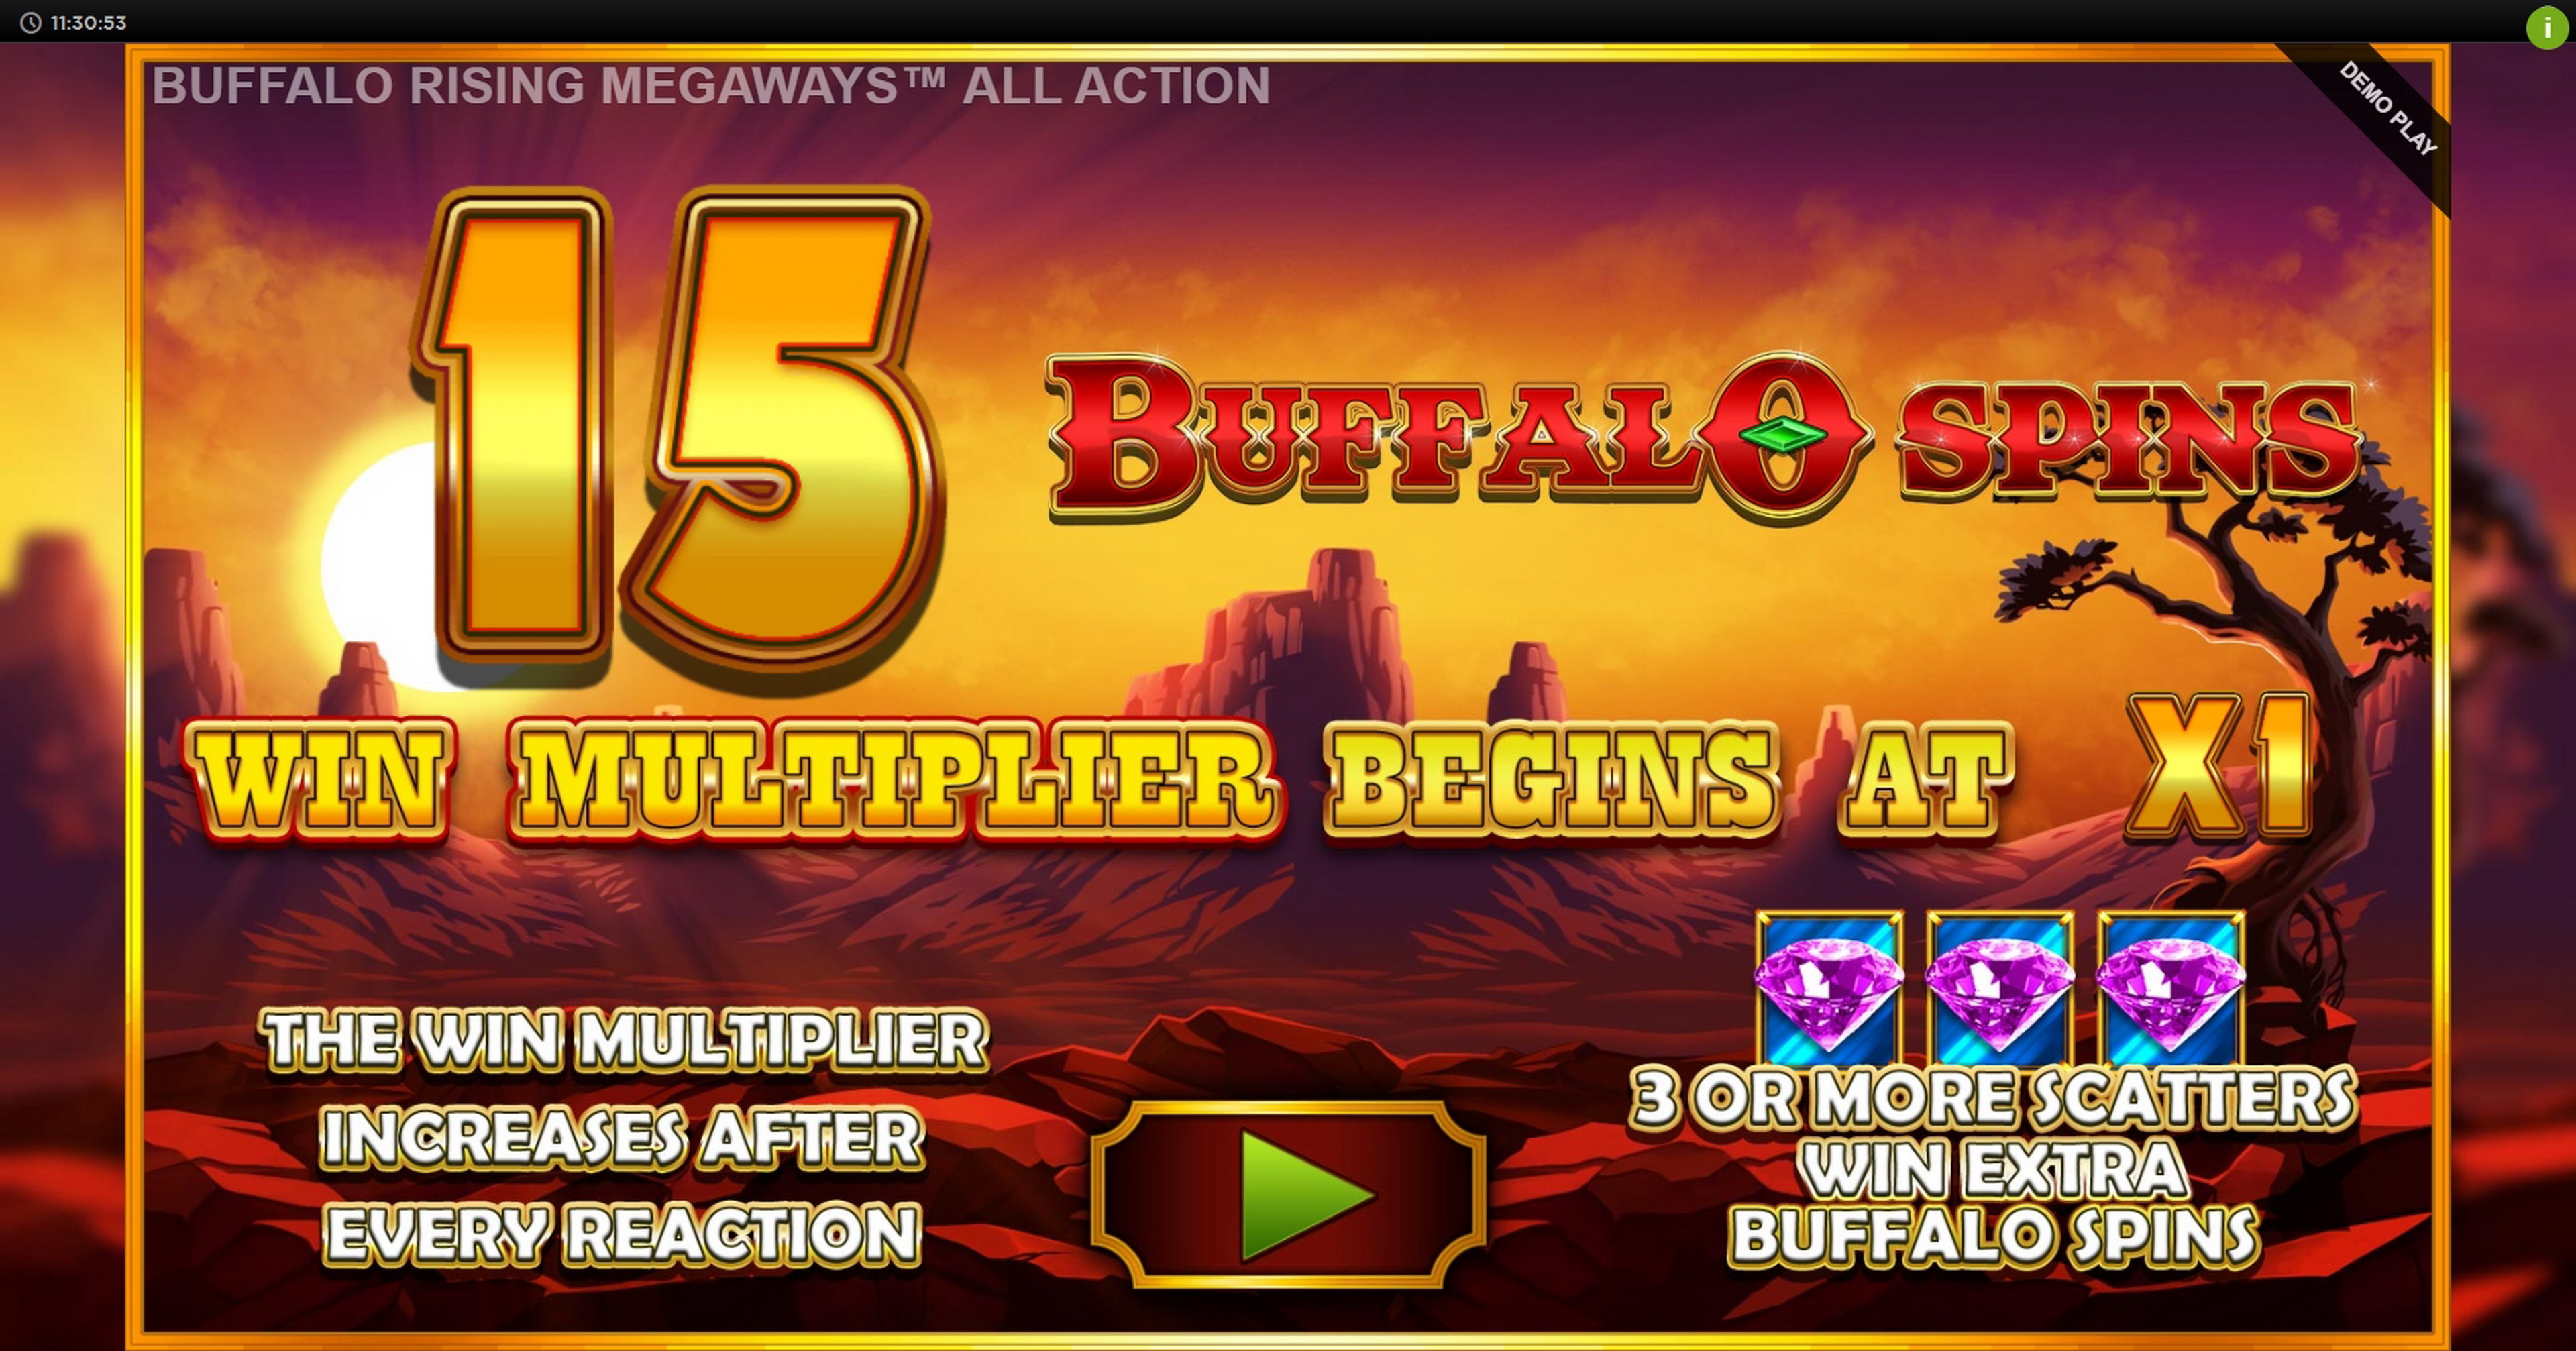 Play Buffalo Rising Megaways All Action Free Casino Slot Game by Blueprint Gaming